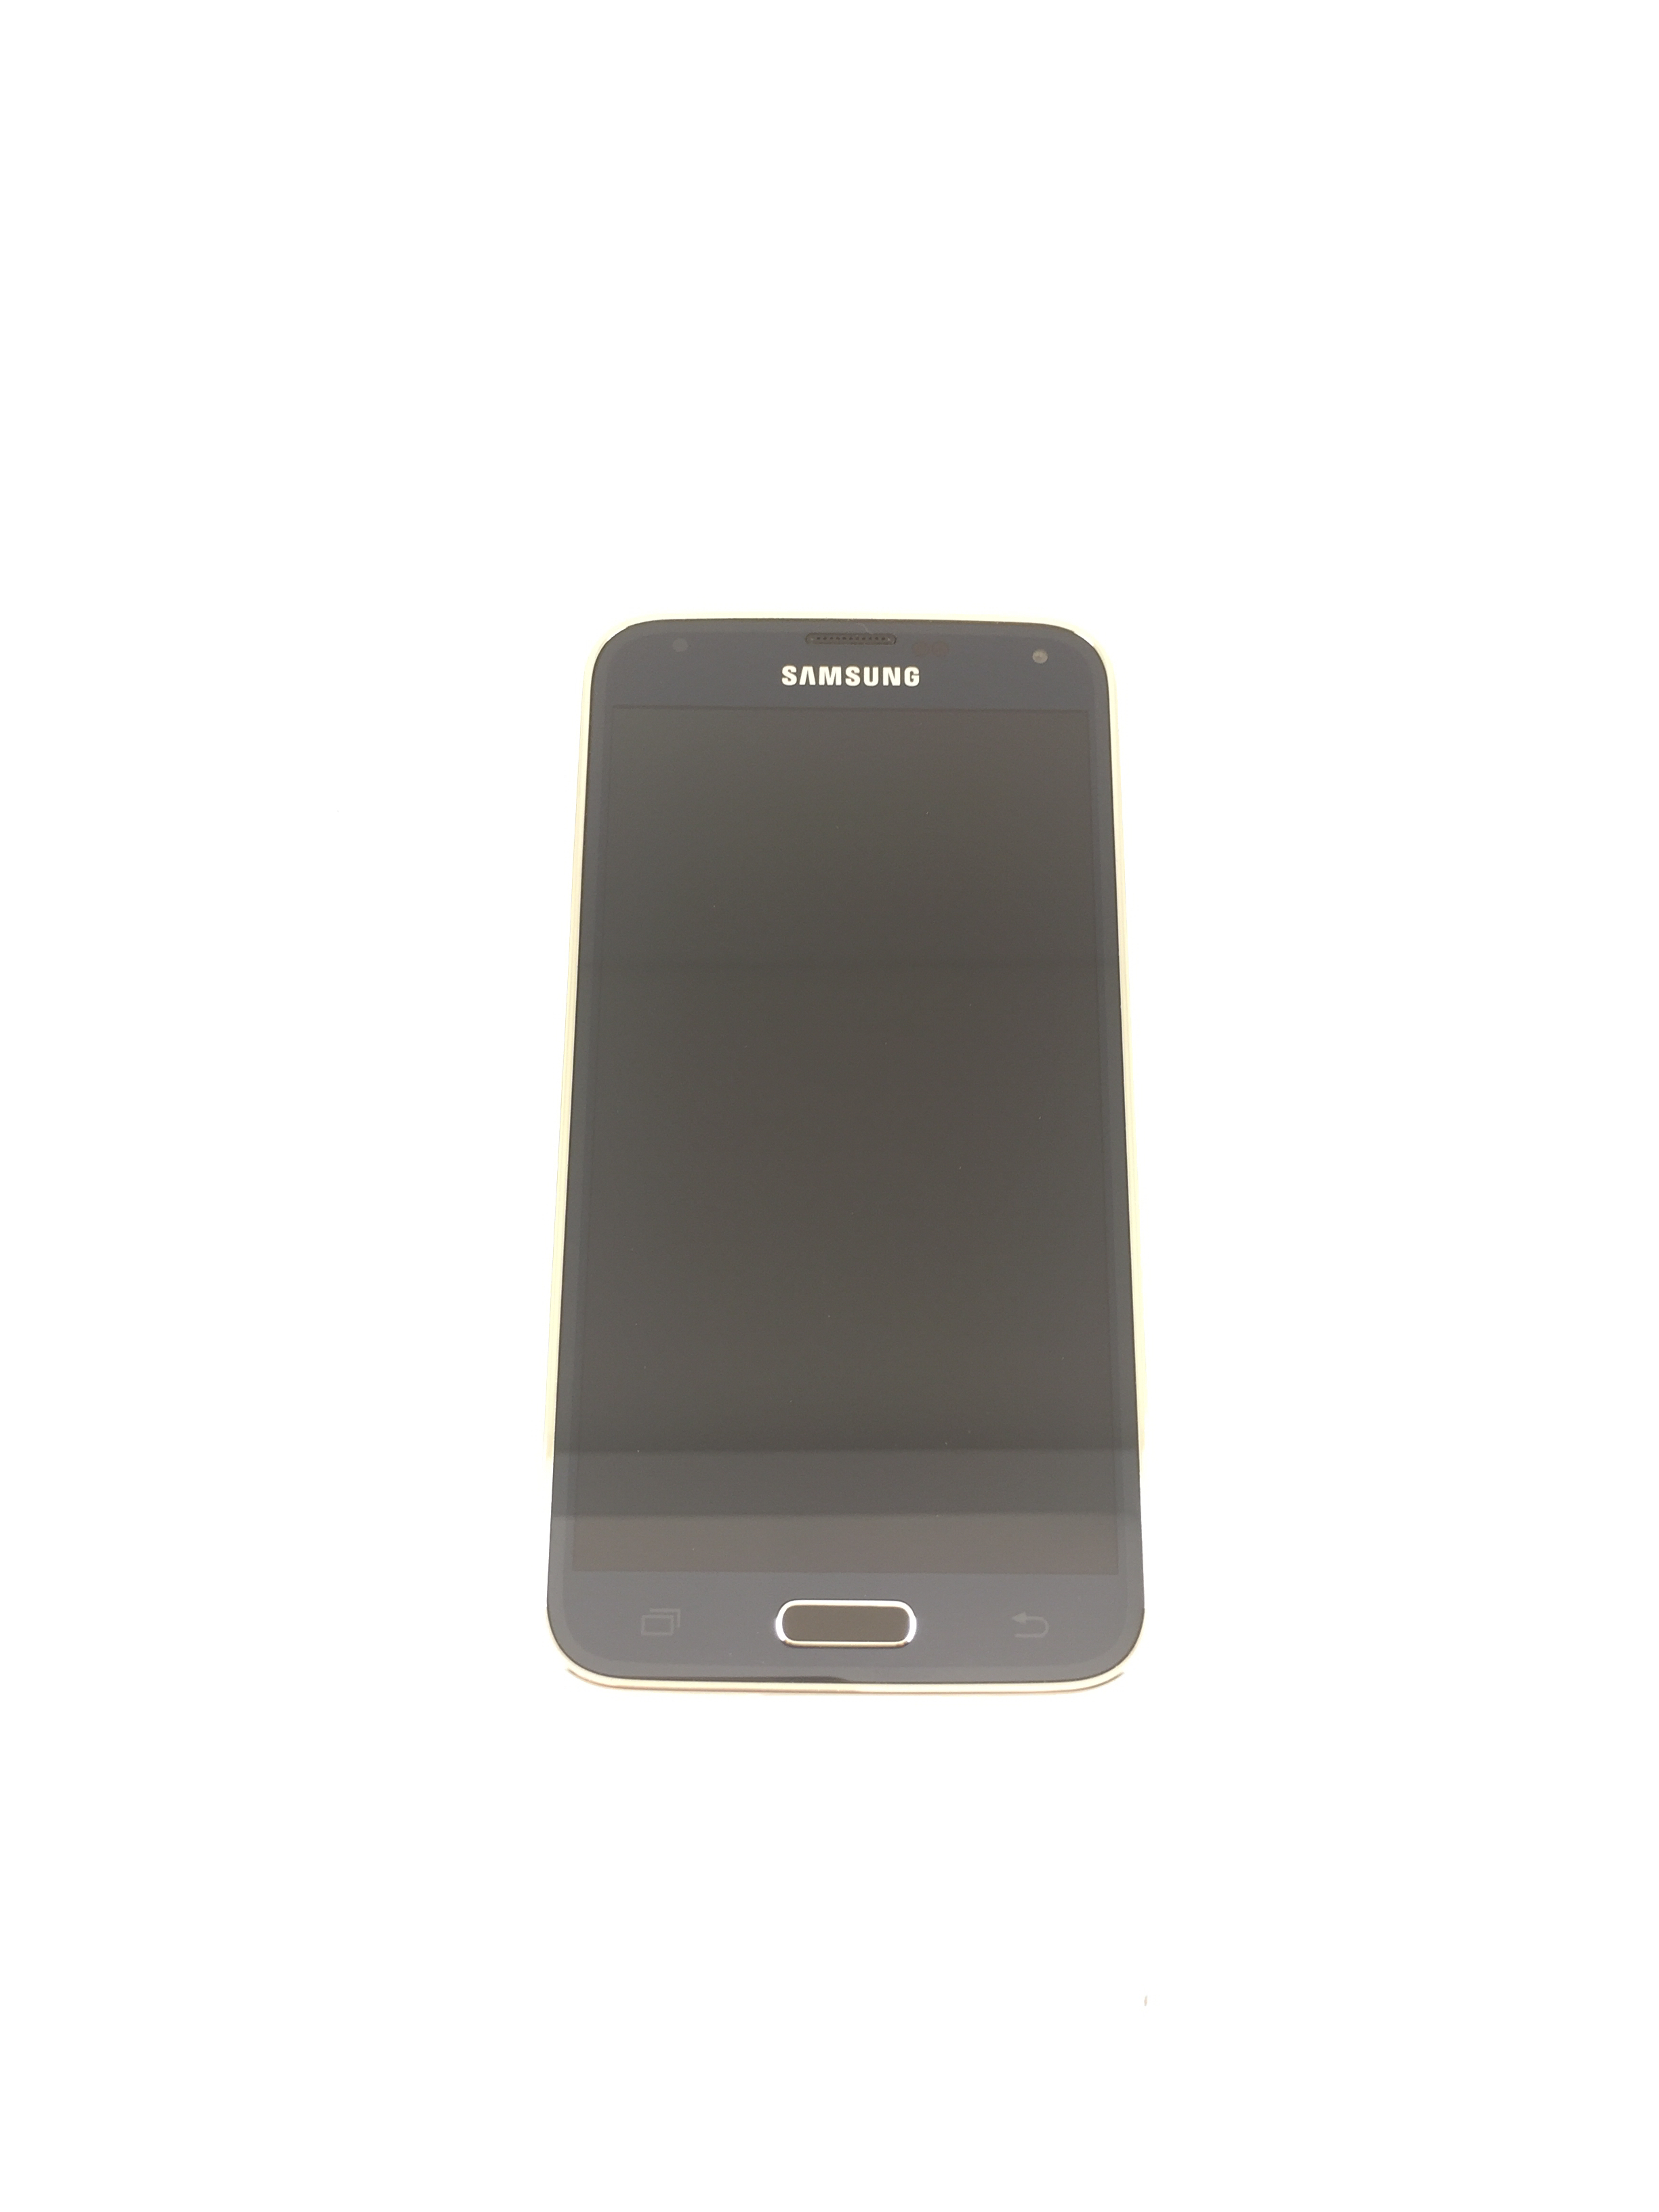 Samsung Galaxy S5 SM-G900F 16GB Svart OLÅST